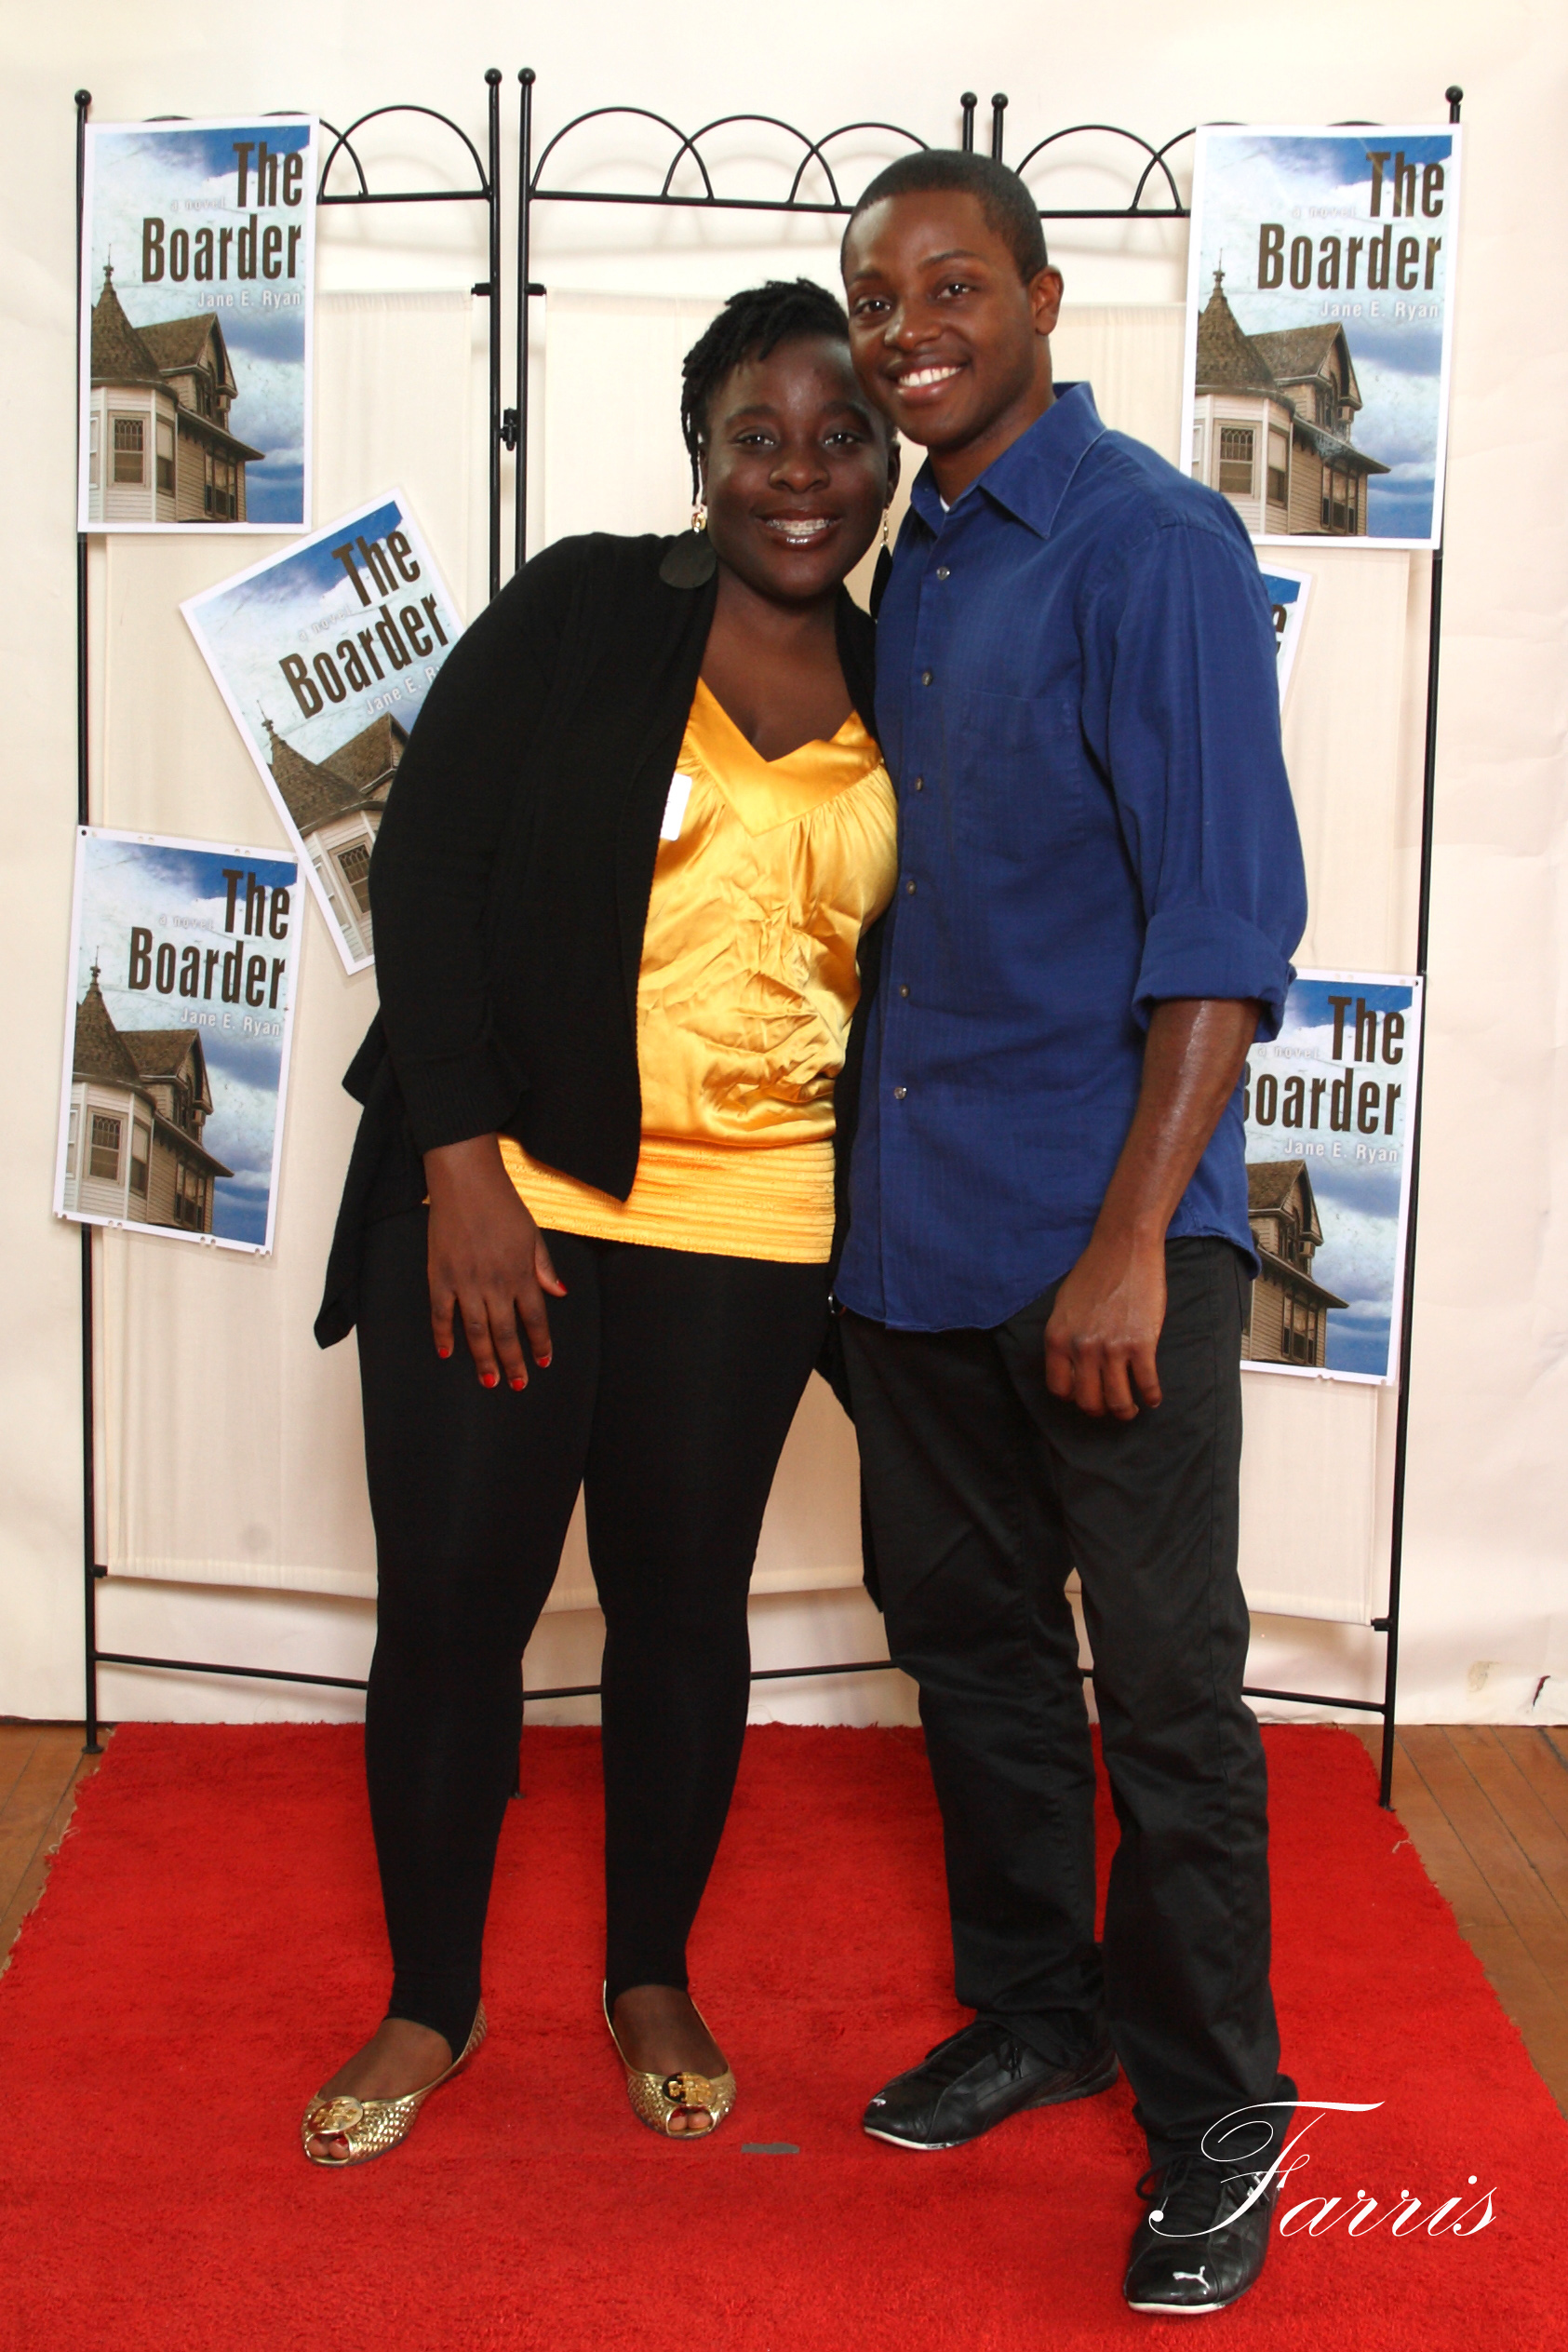 Monalisa Nwokike and Patrick J. Nicolas at the boarder fundraiser.